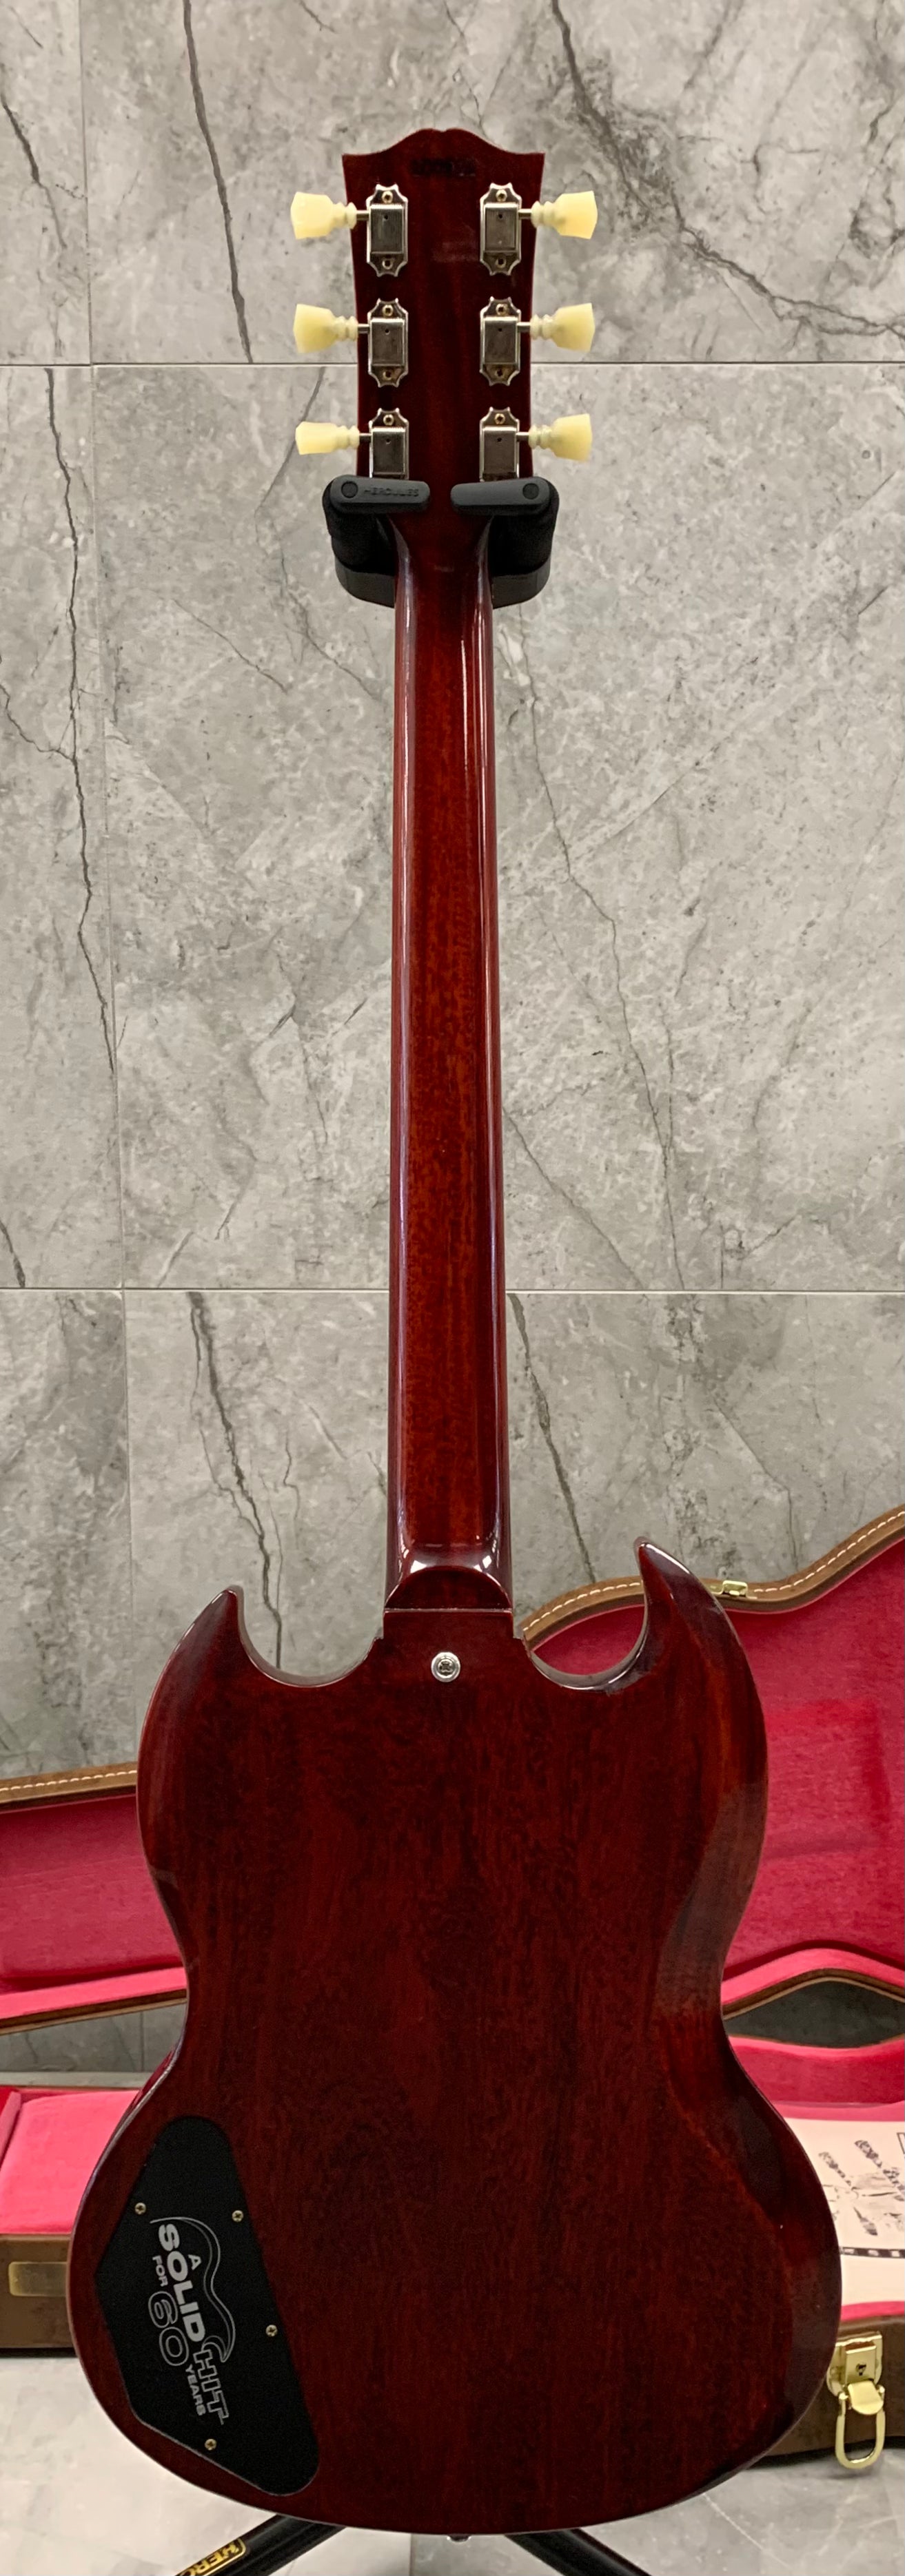 Gibson Custom Shop 60th Anniversary 1961 LES PAUL SG STANDARD WITH SIDEWAYS VIBROLA VOS CHERRY RED SGSR60VOCHSN SERIAL NUMBER 100911 7.2 LBS